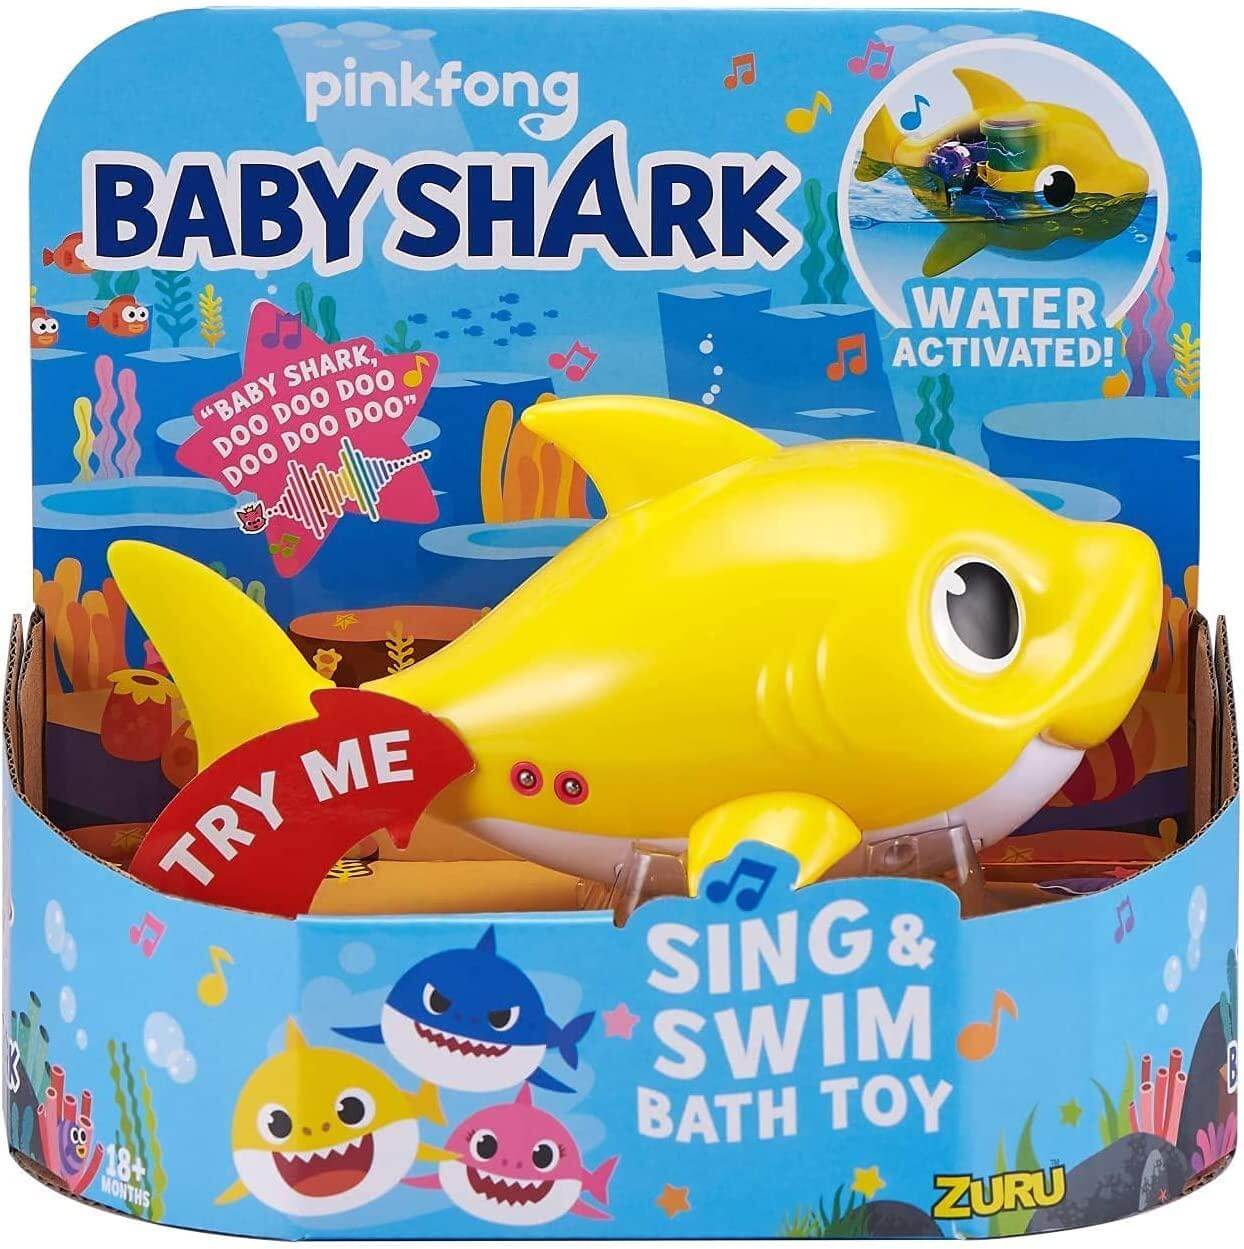 Recall Alert: Baby Shark Toys Recalled Over Injury Hazards